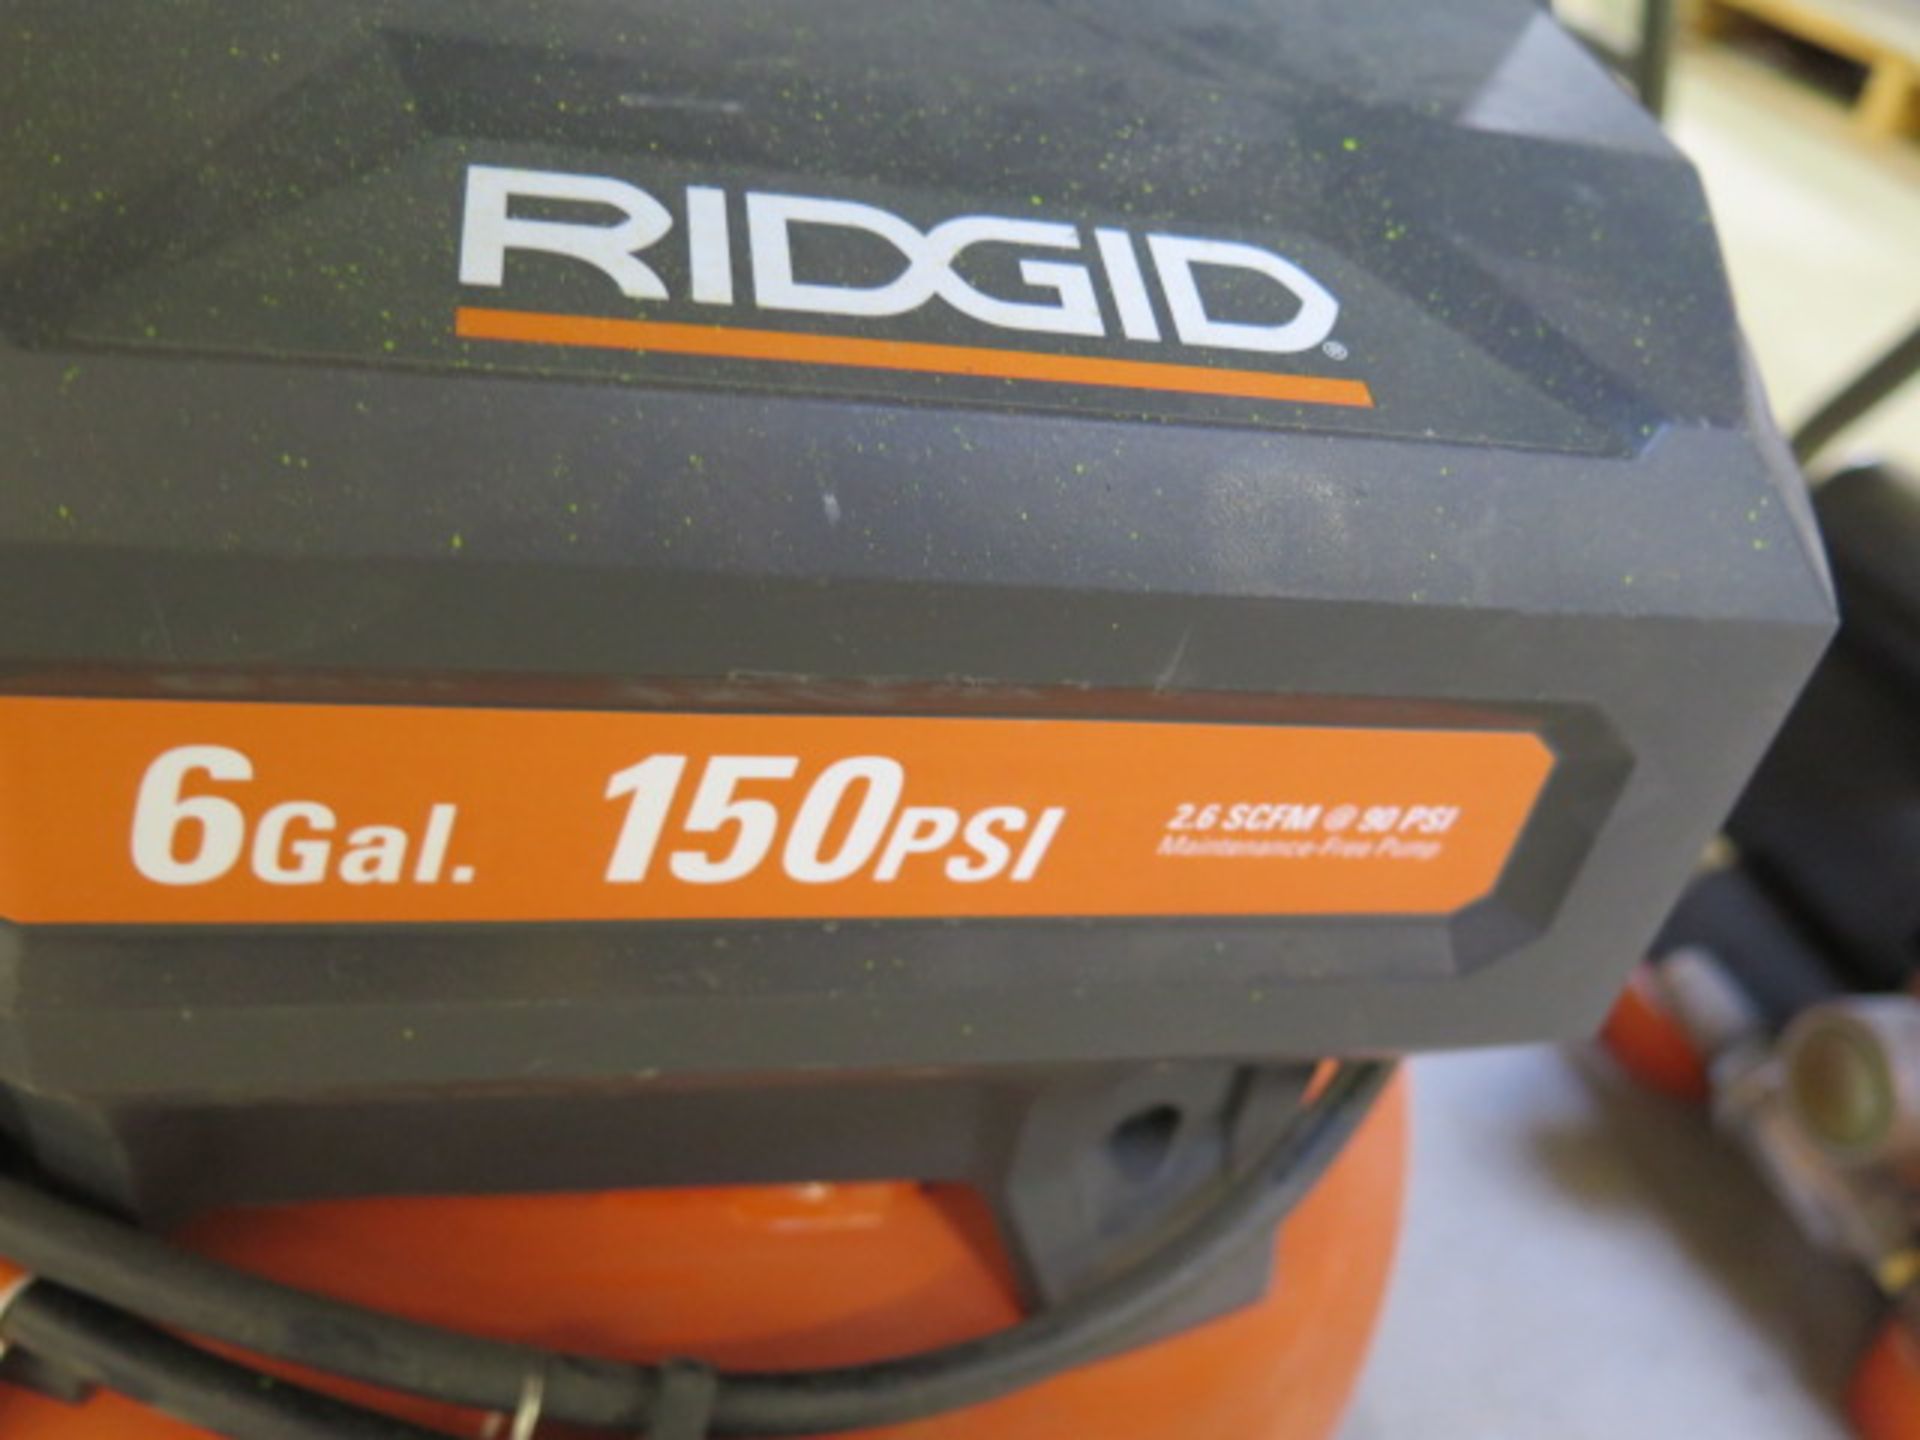 Ridgid 6 Gallon Portable Air Compressor (SOLD AS-IS - NO WARRANTY) - Image 4 of 4